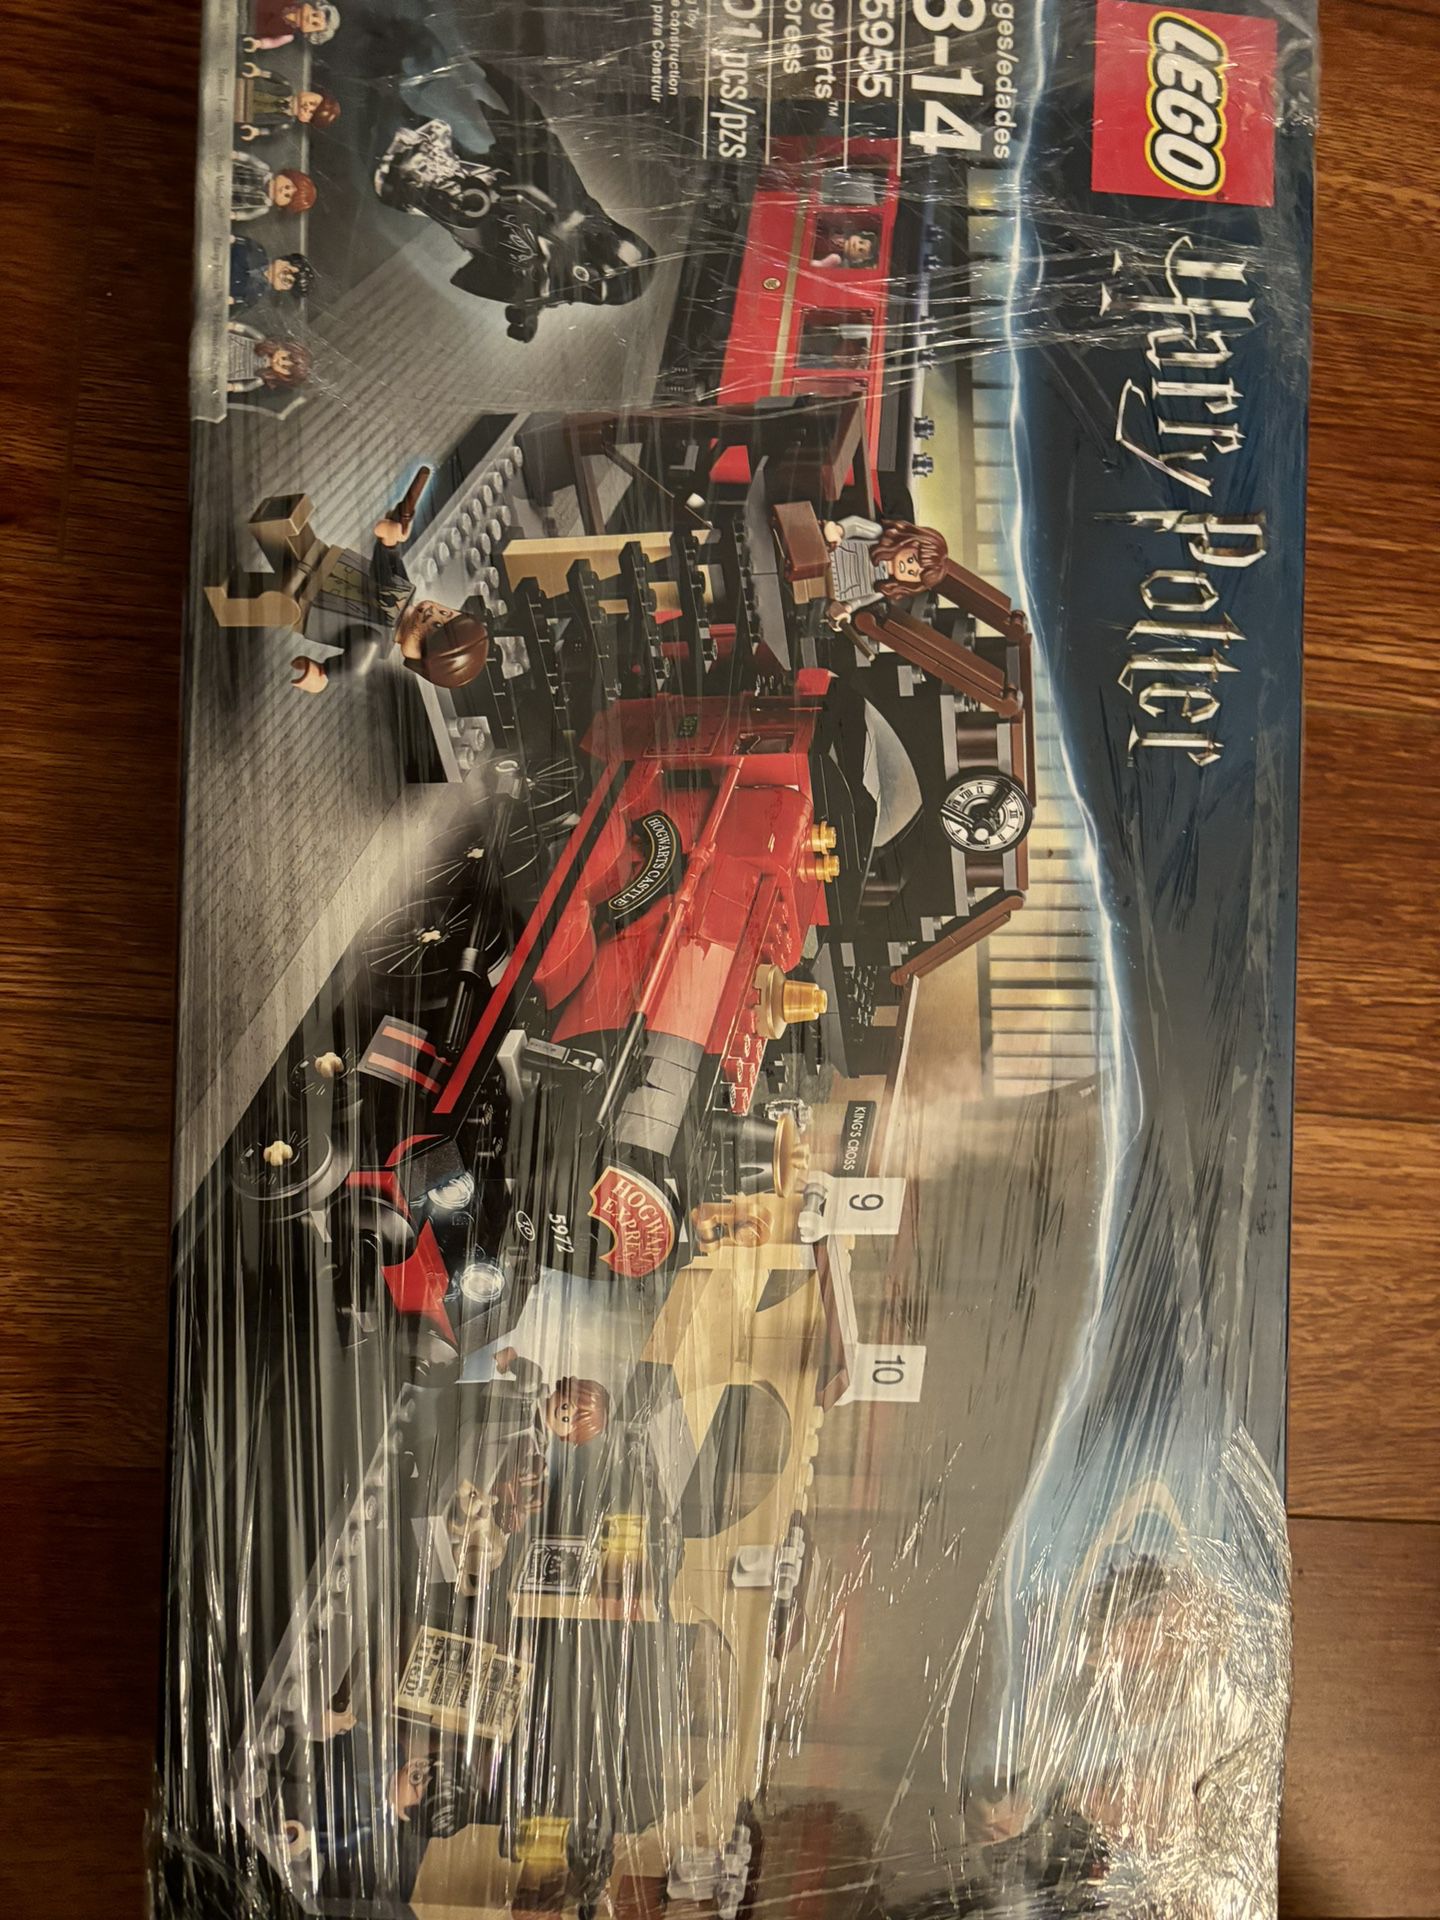 Lego 75955 Harry Potter